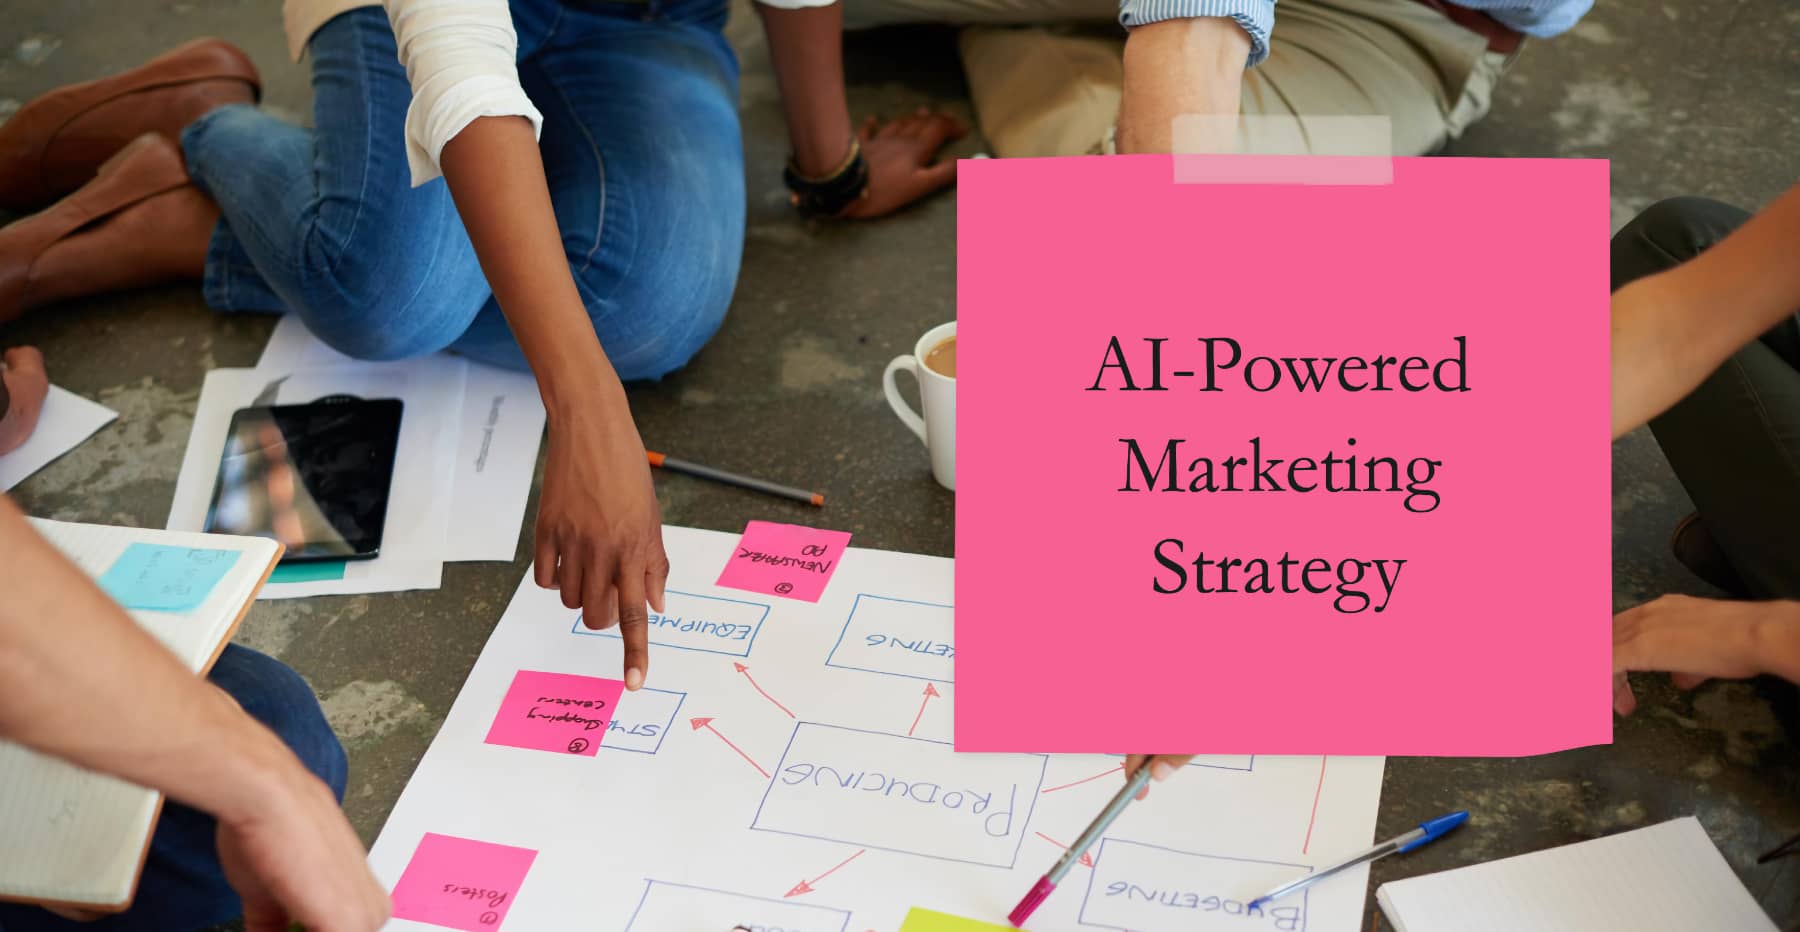 Developing an AI-Powered Marketing Strategy